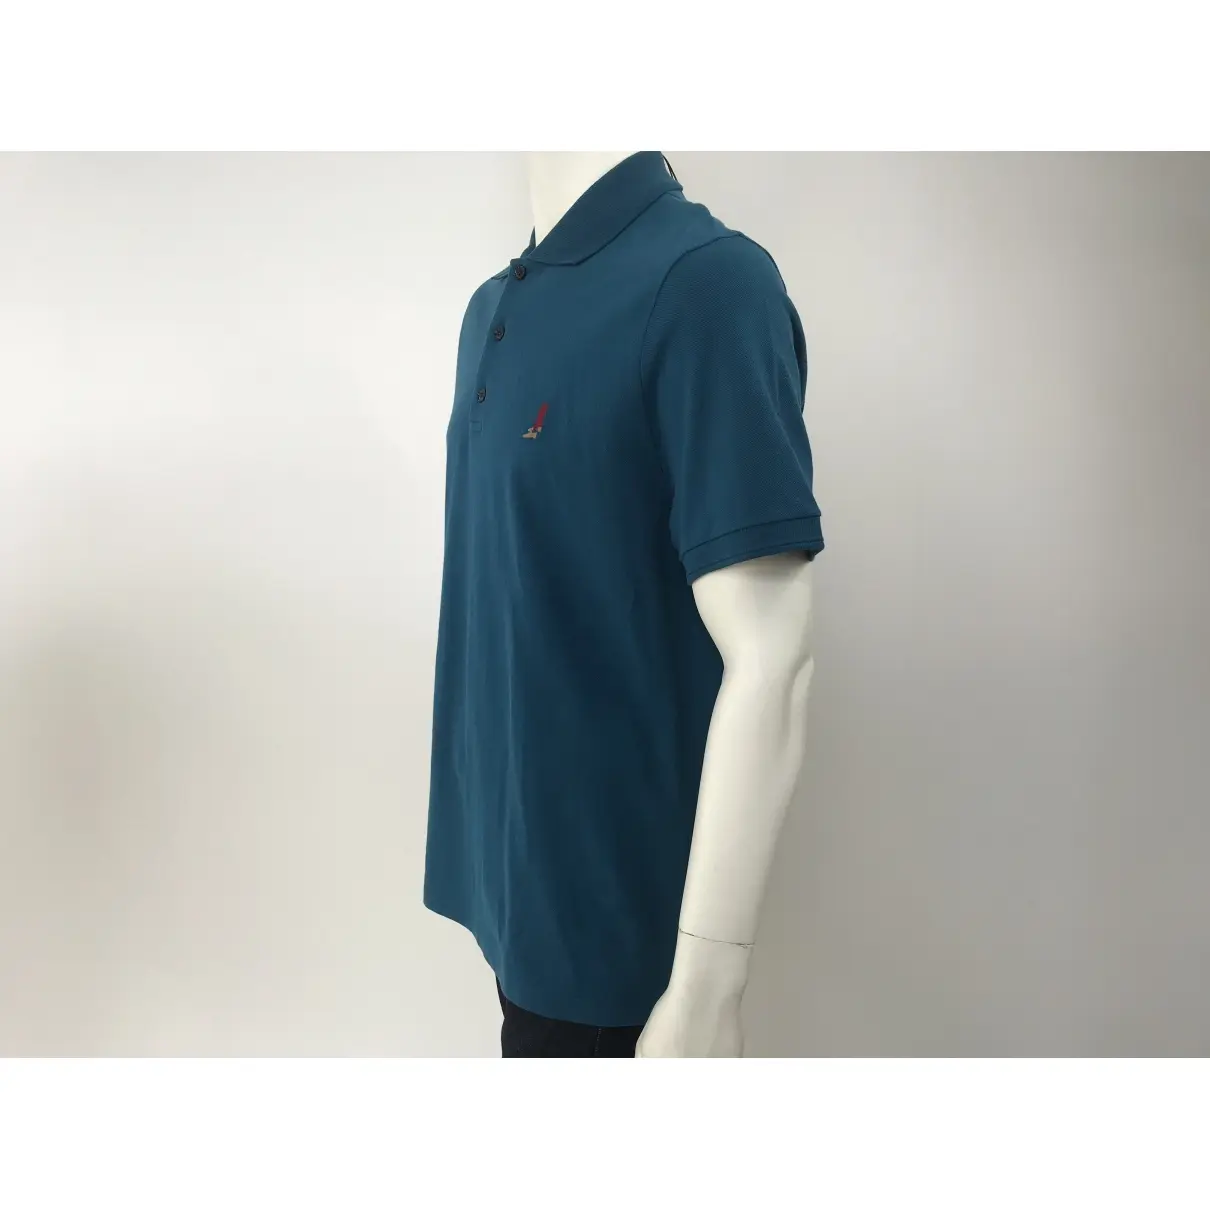 Berluti Polo shirt for sale